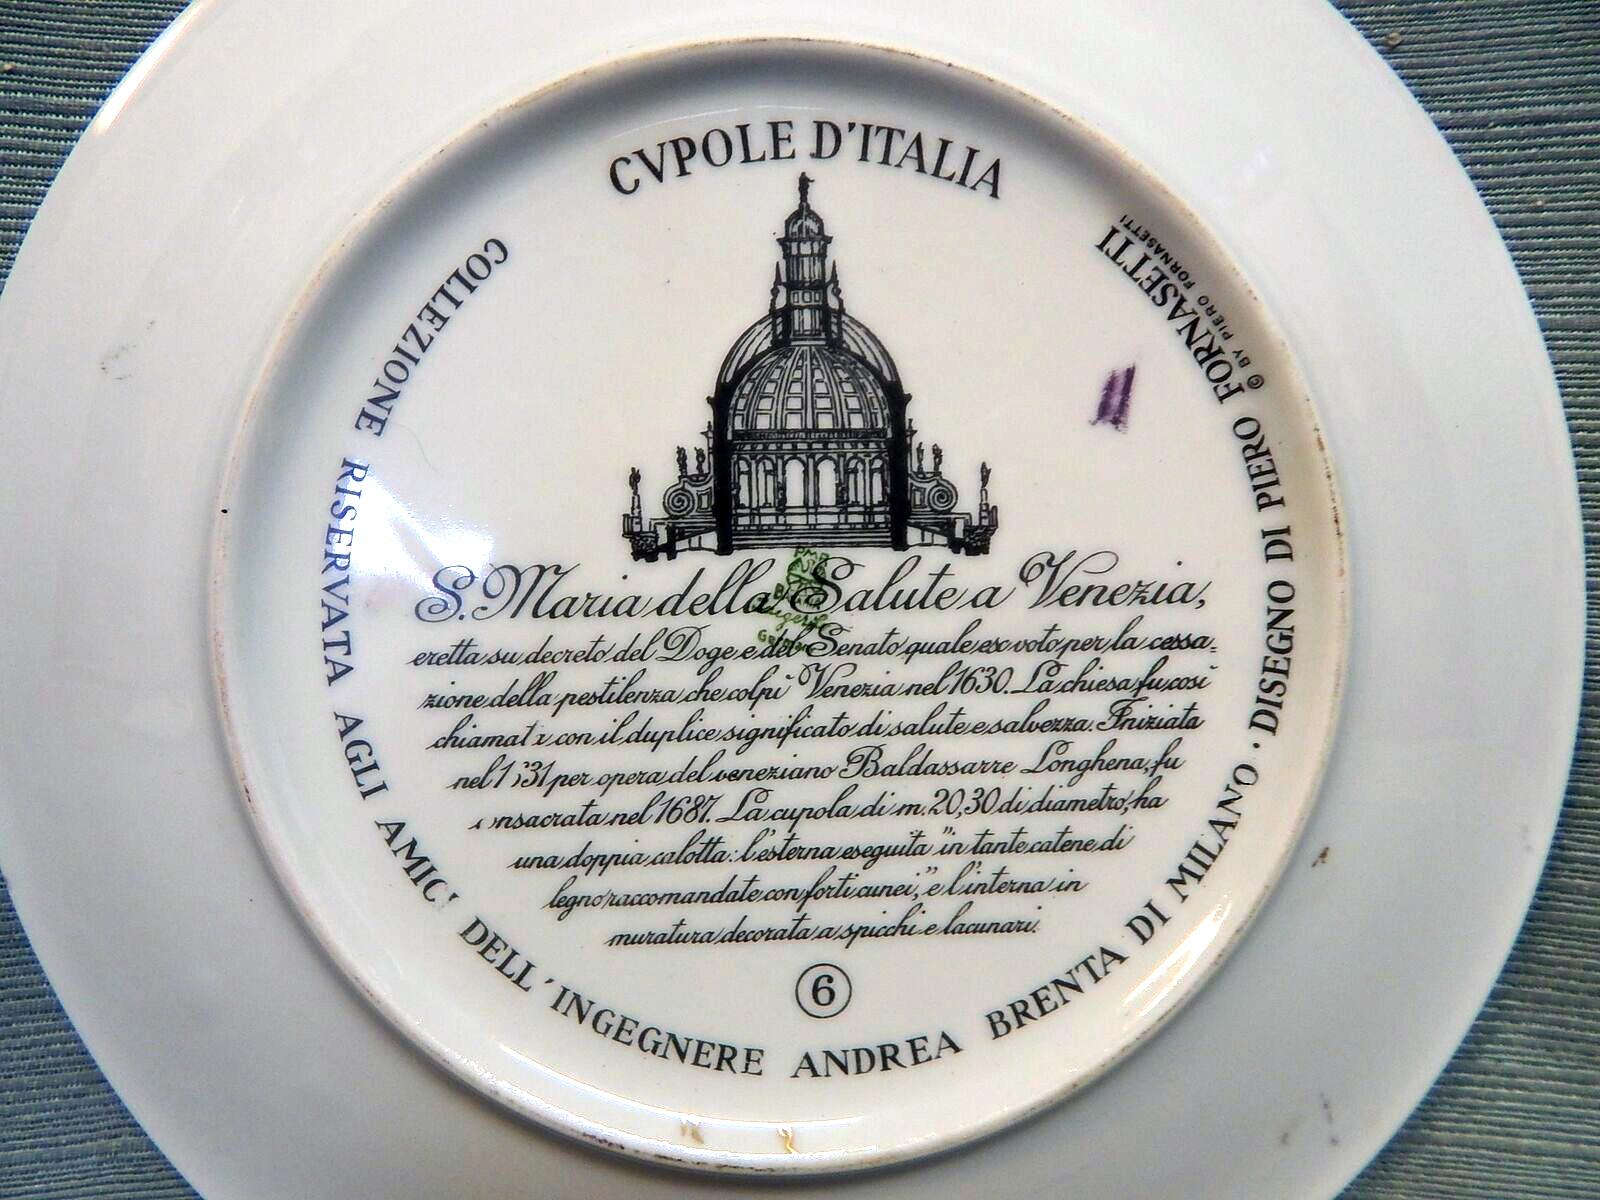 Vintage 1960s Piero Fornasetti Church Dome Porcelain Plate,
Cupole d'Italia,
#6, 